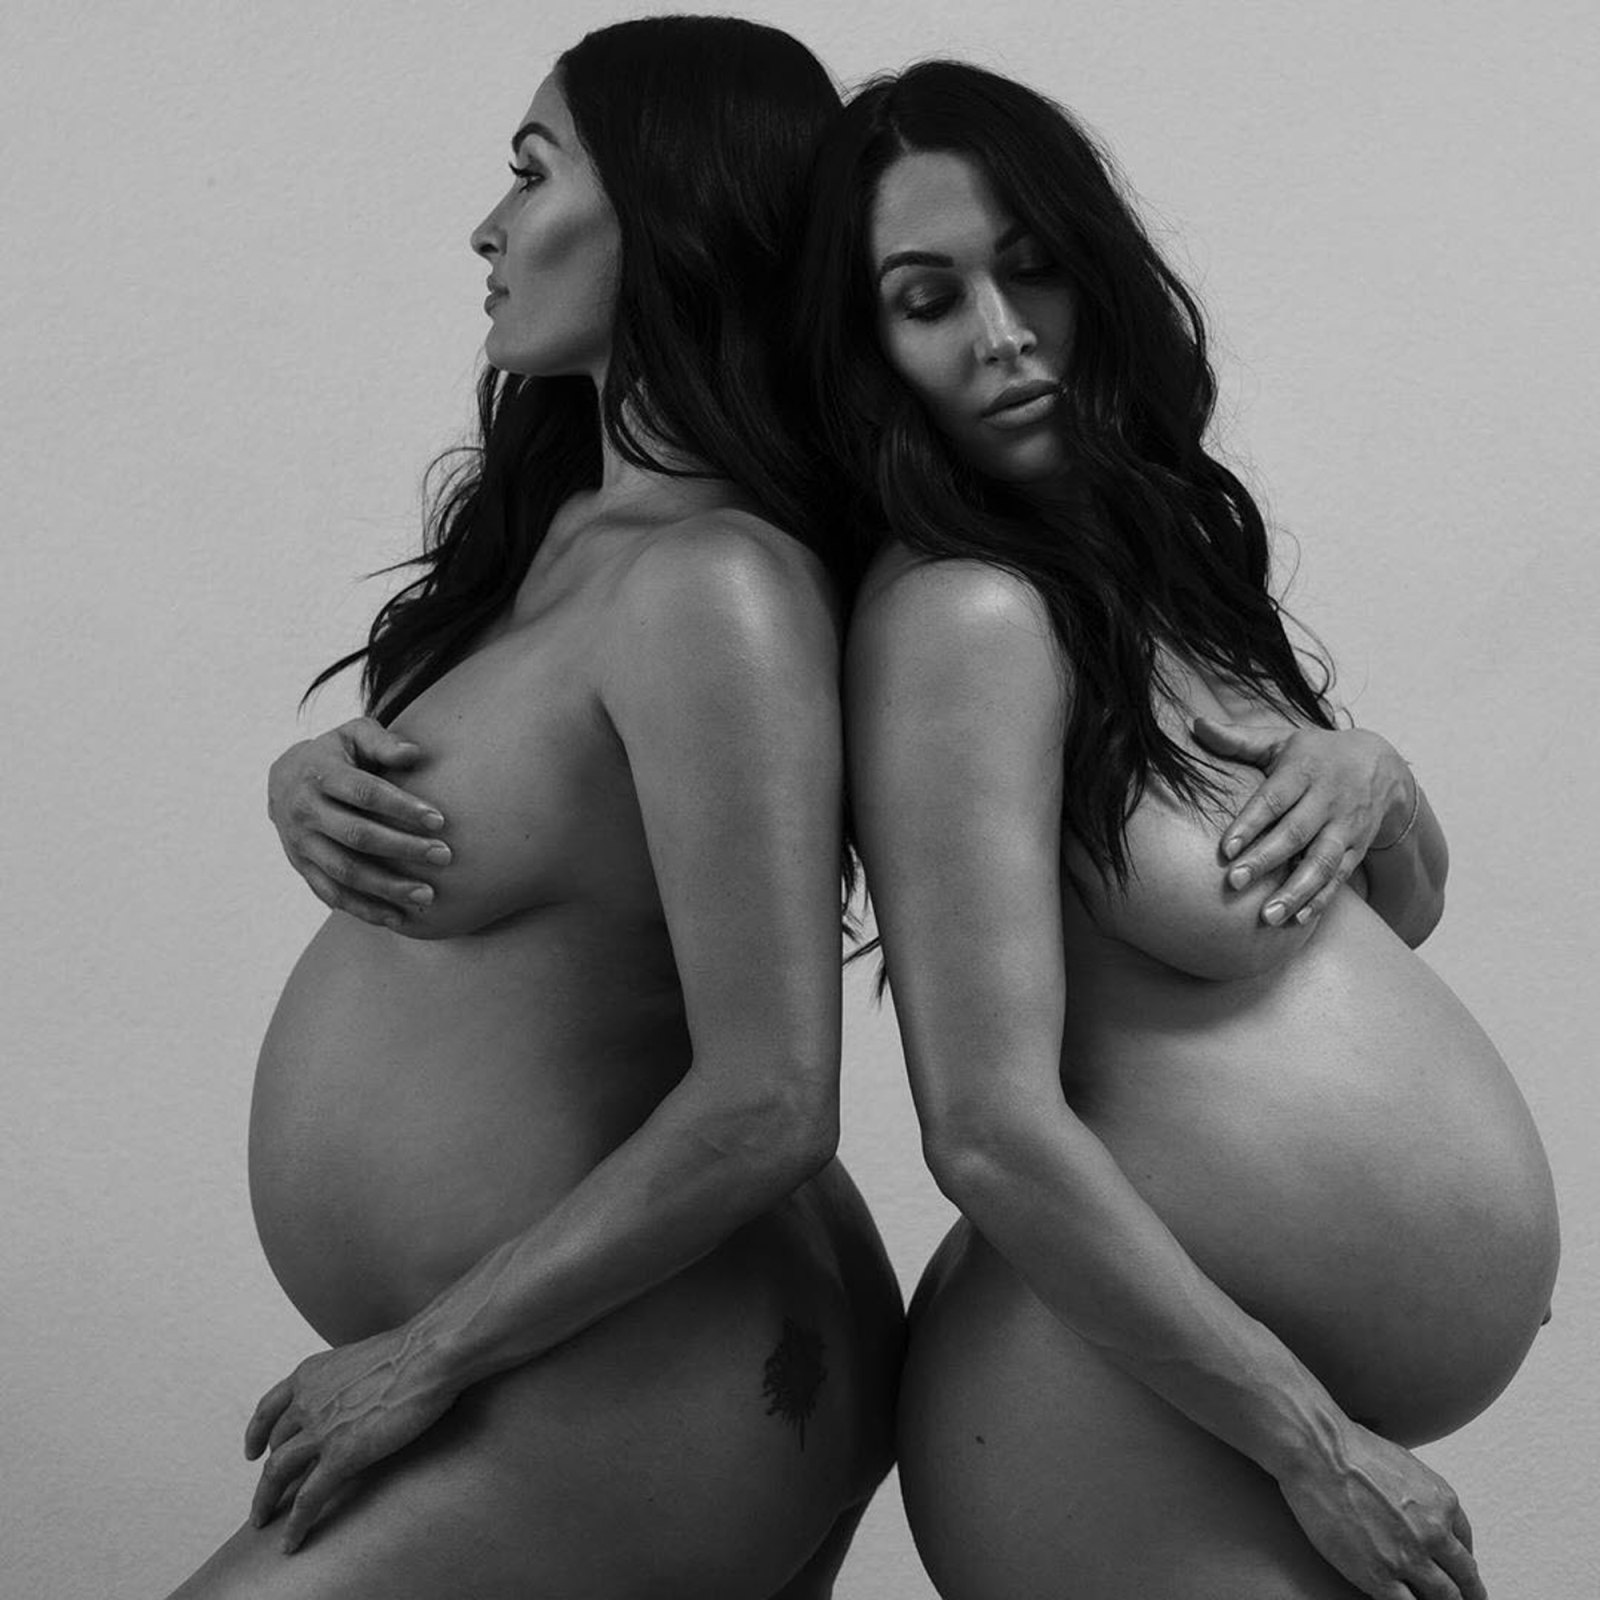 Nikki Celebrity Naked Porn - Pregnant Nikki, Brie Bella Pose Nude Ahead of Birth: Baby Bump Pics